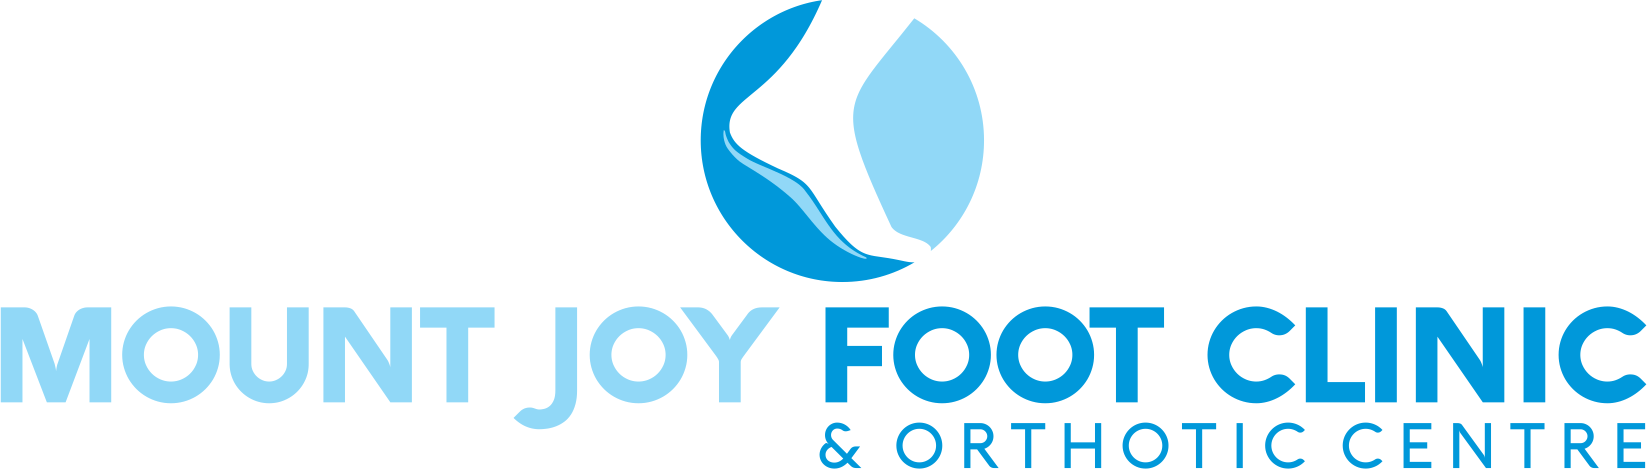 Mount Joy Foot Clinic